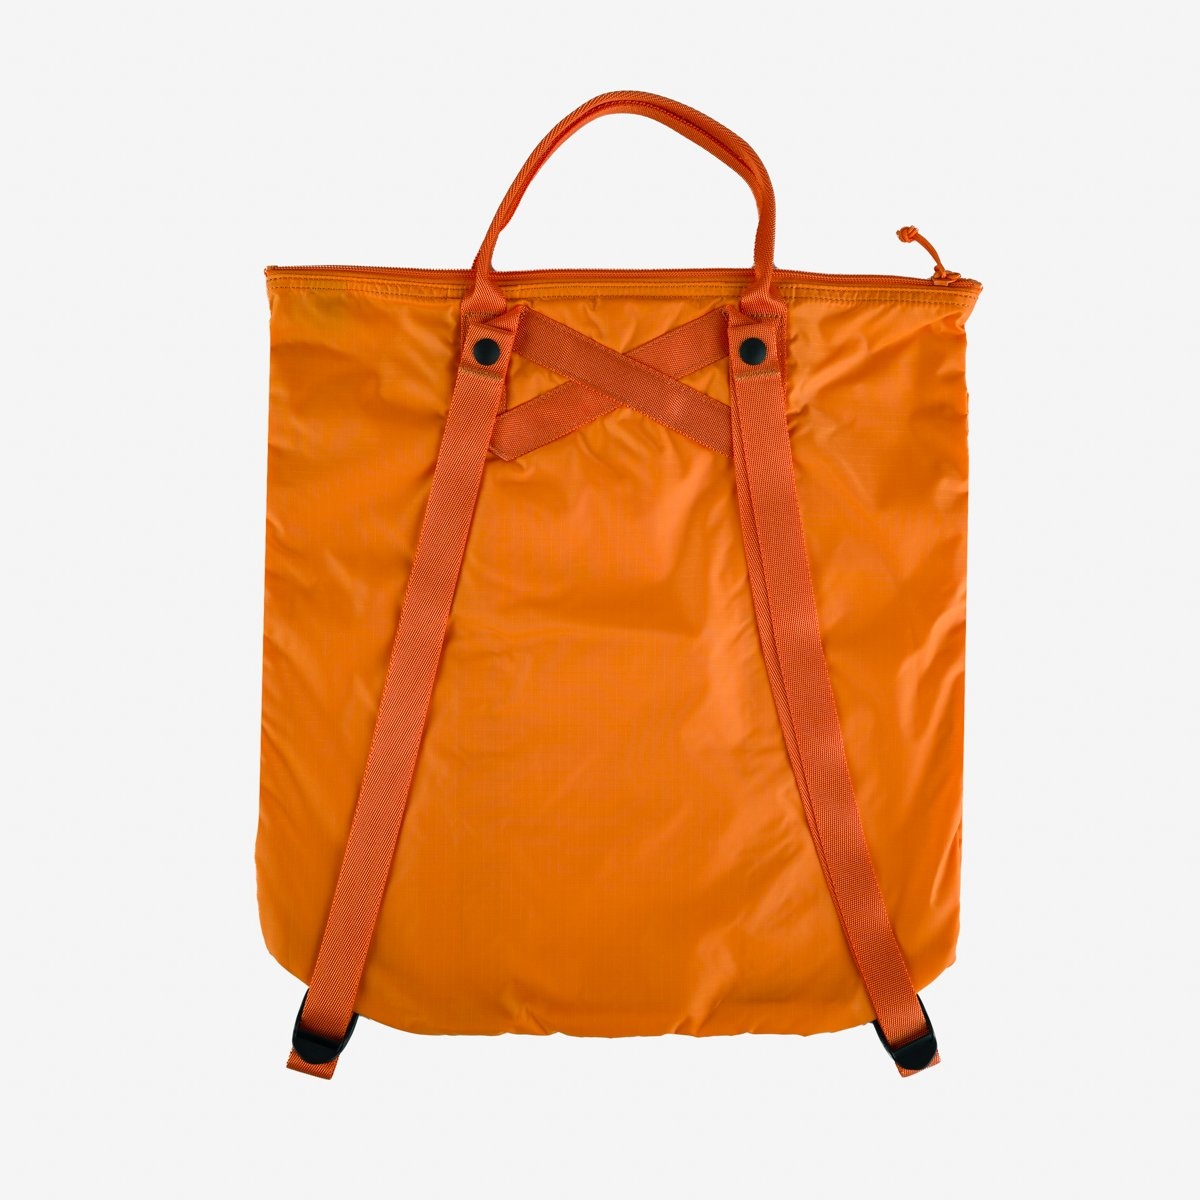 POR-FLEX-TOTE-ORA Porter - Yoshida & Co. - Flex 2Way Tote Bag - Orange - 4